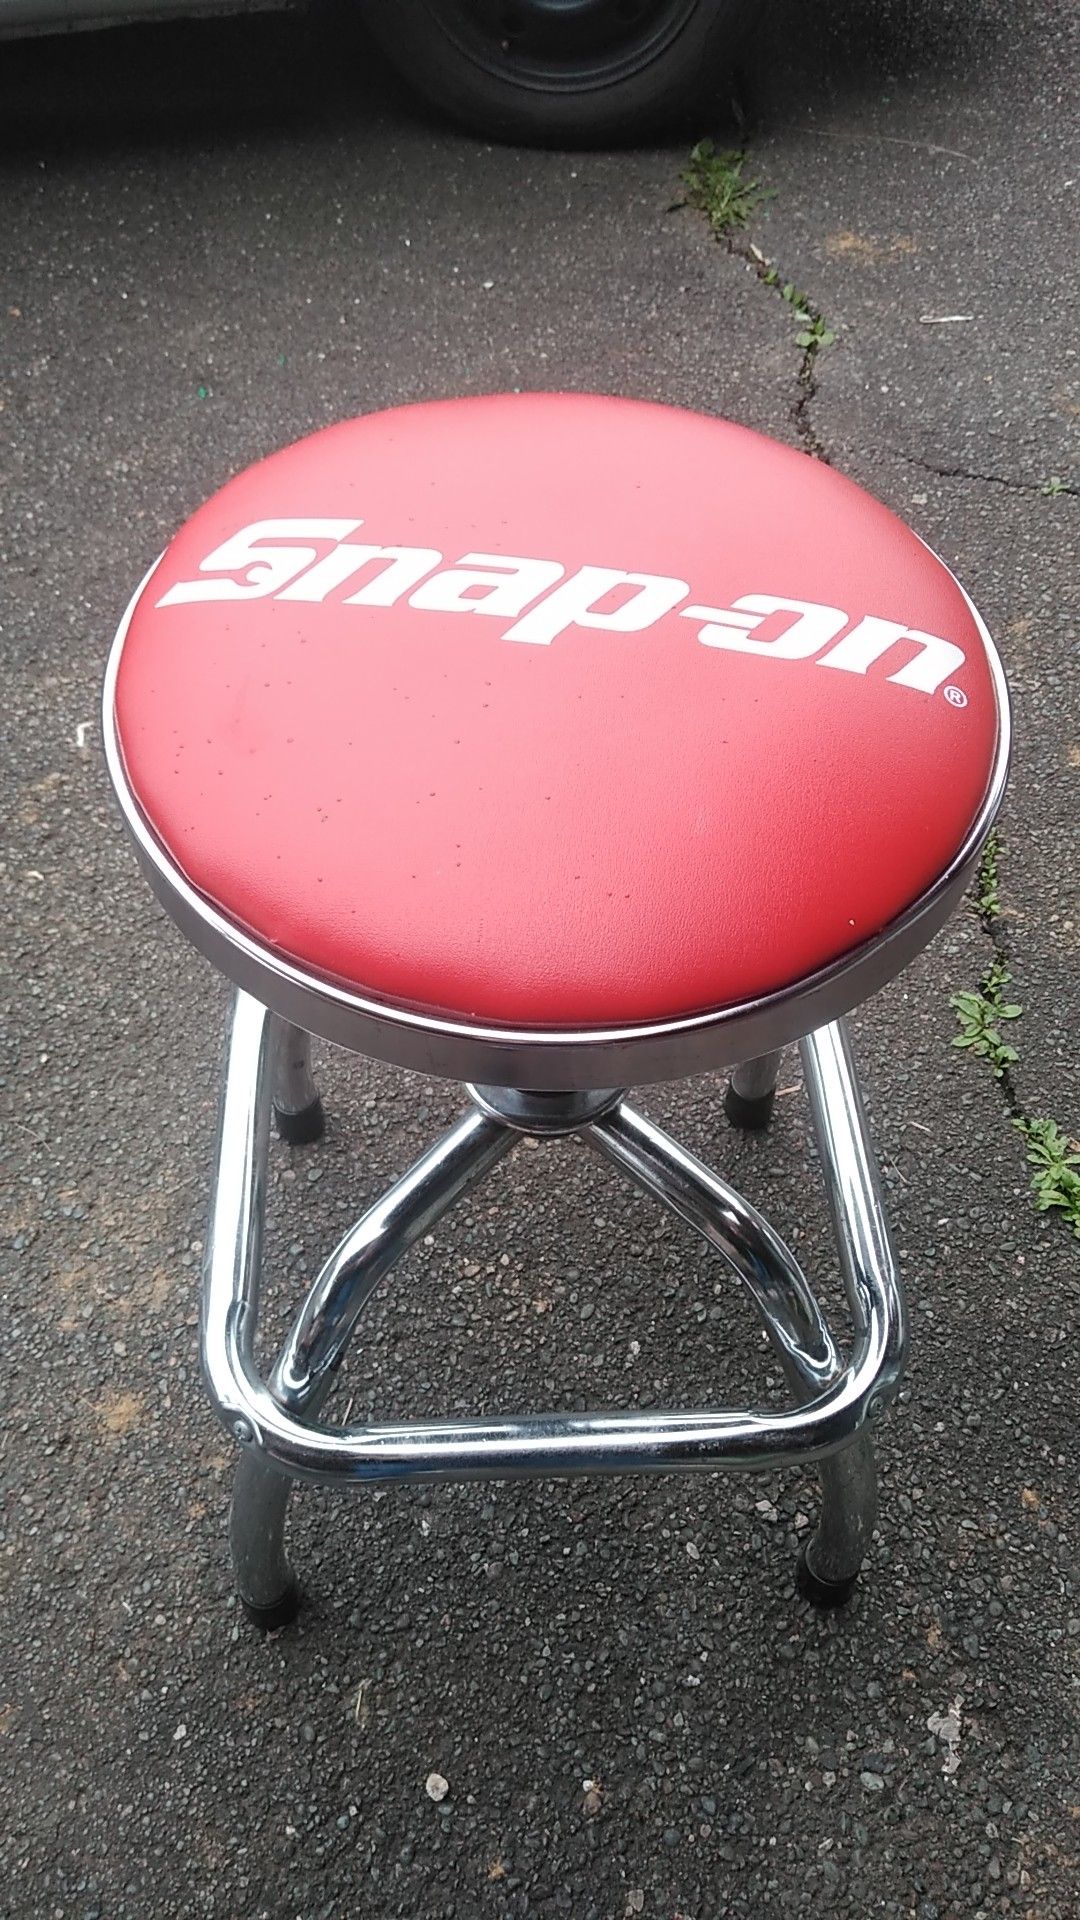 Snap on hydraulic mechanics stool